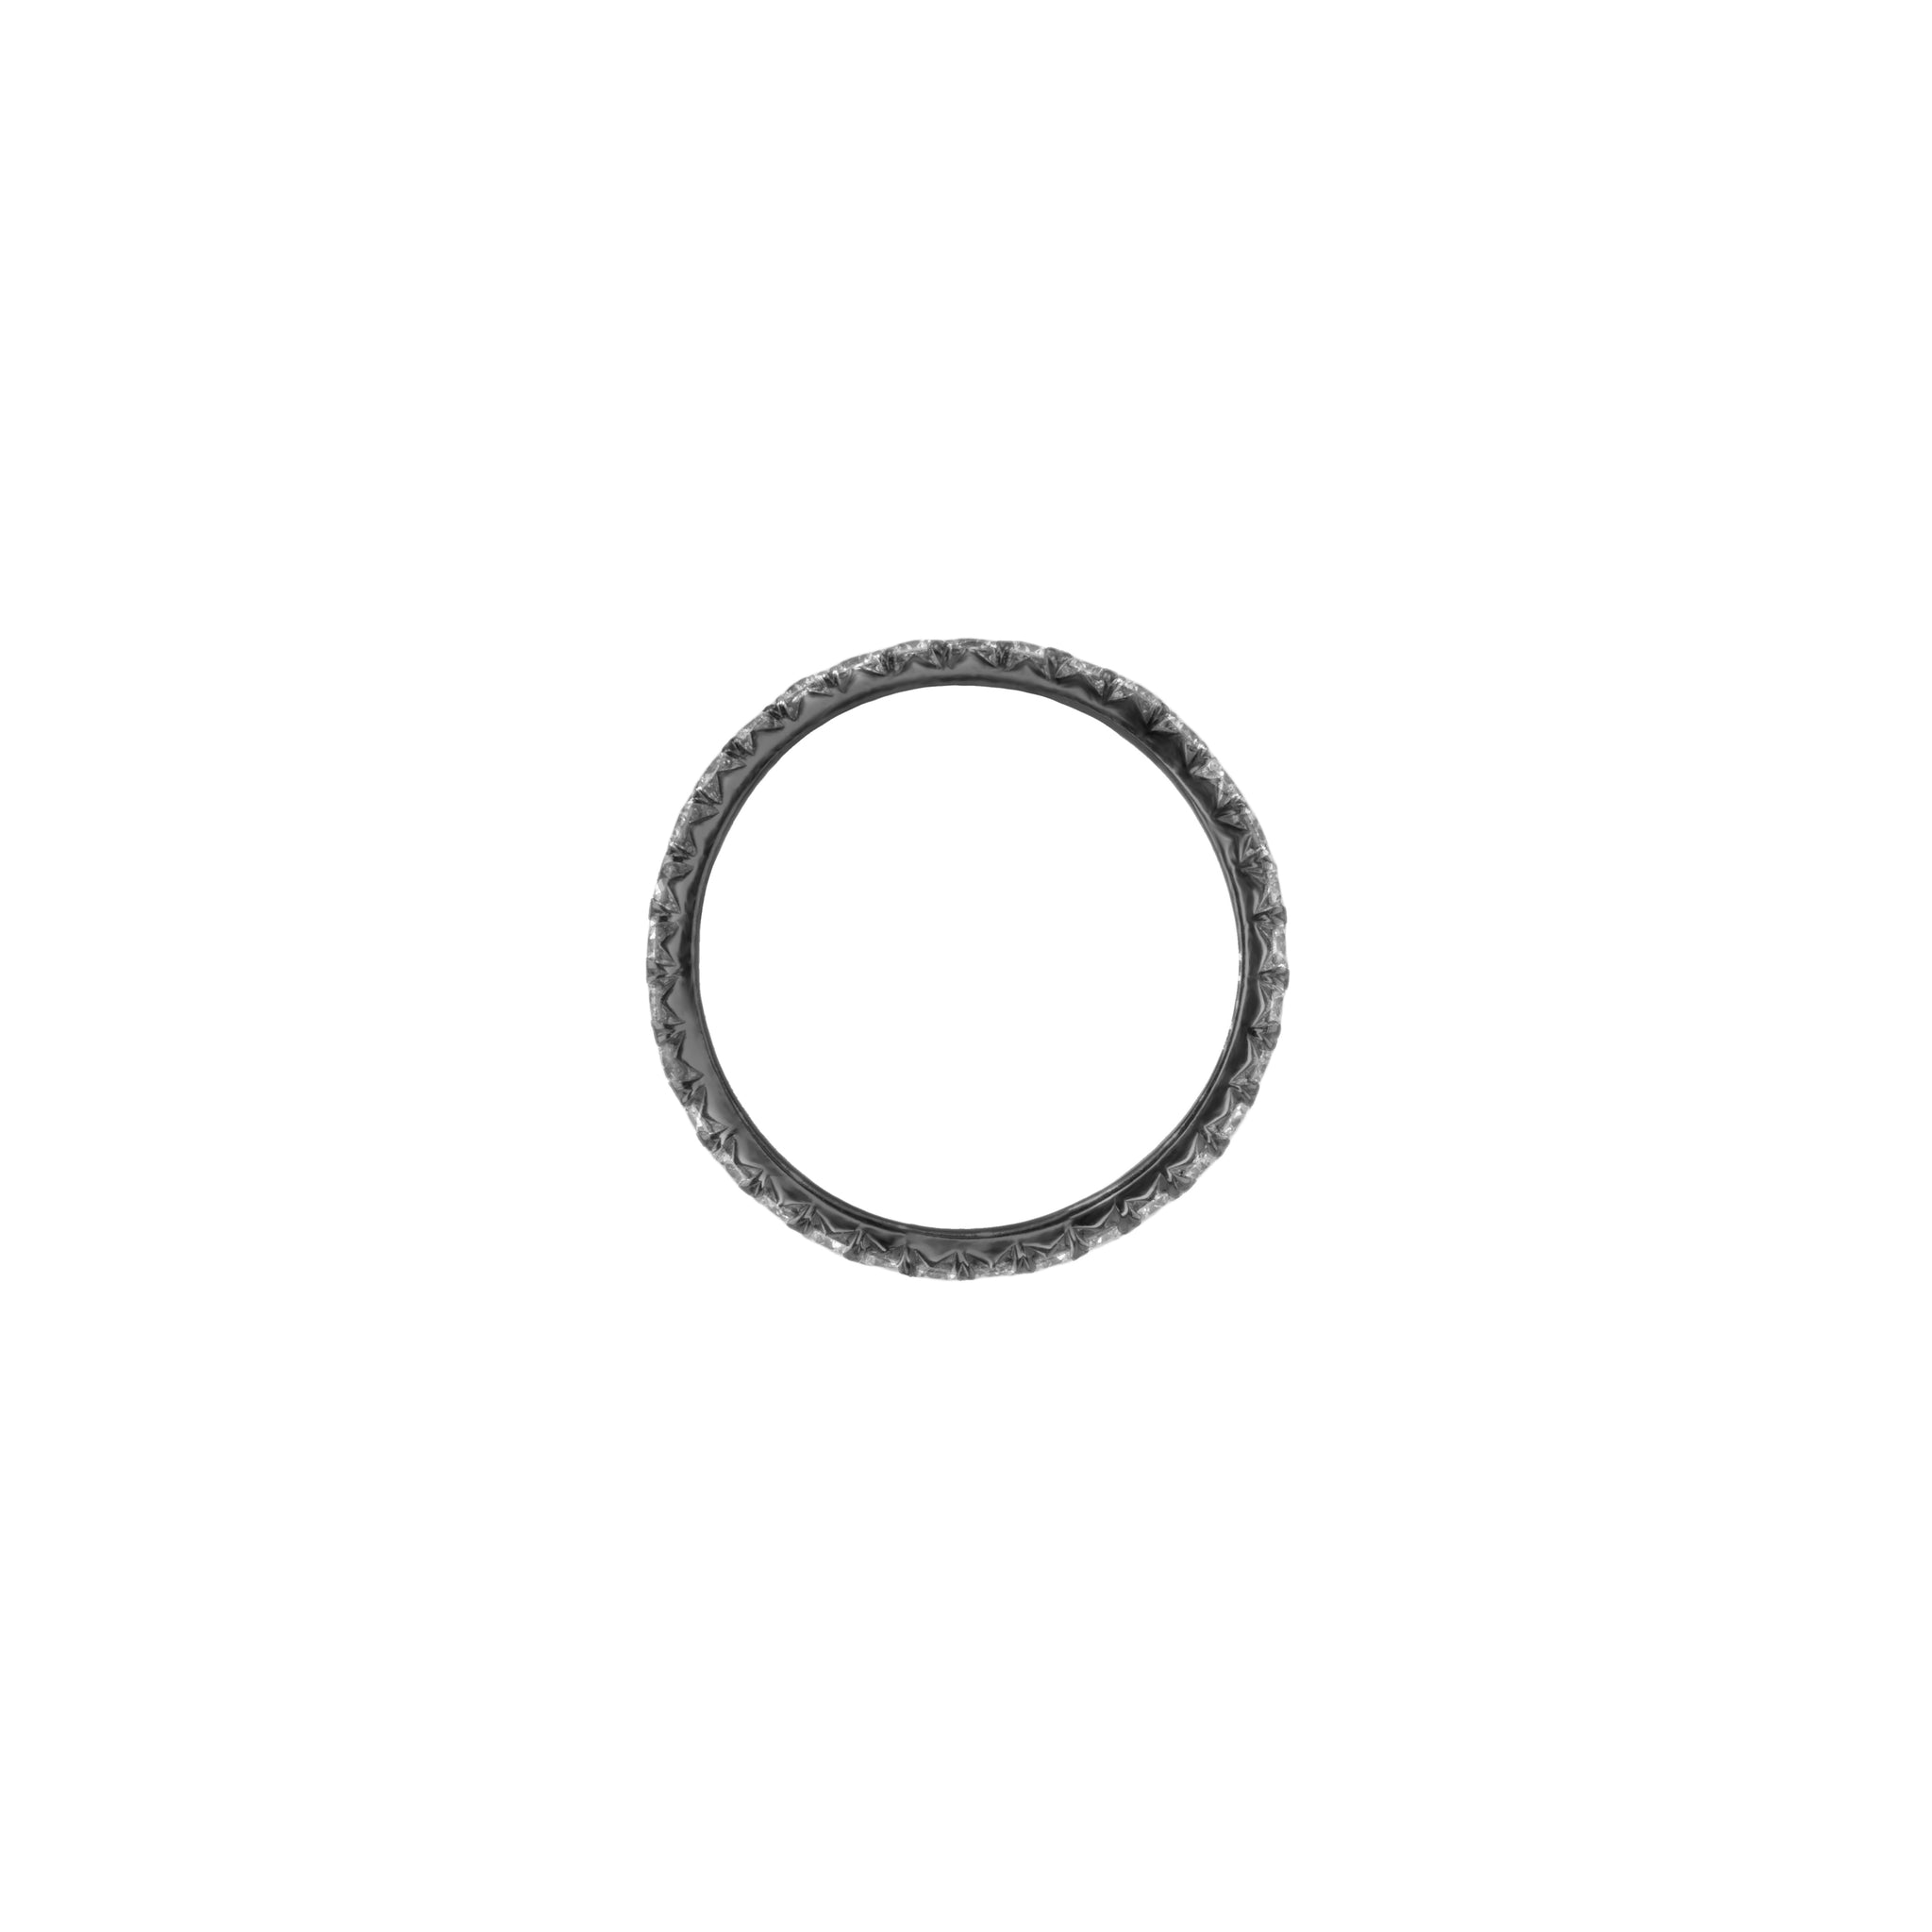 the ètoile noir eternity ring